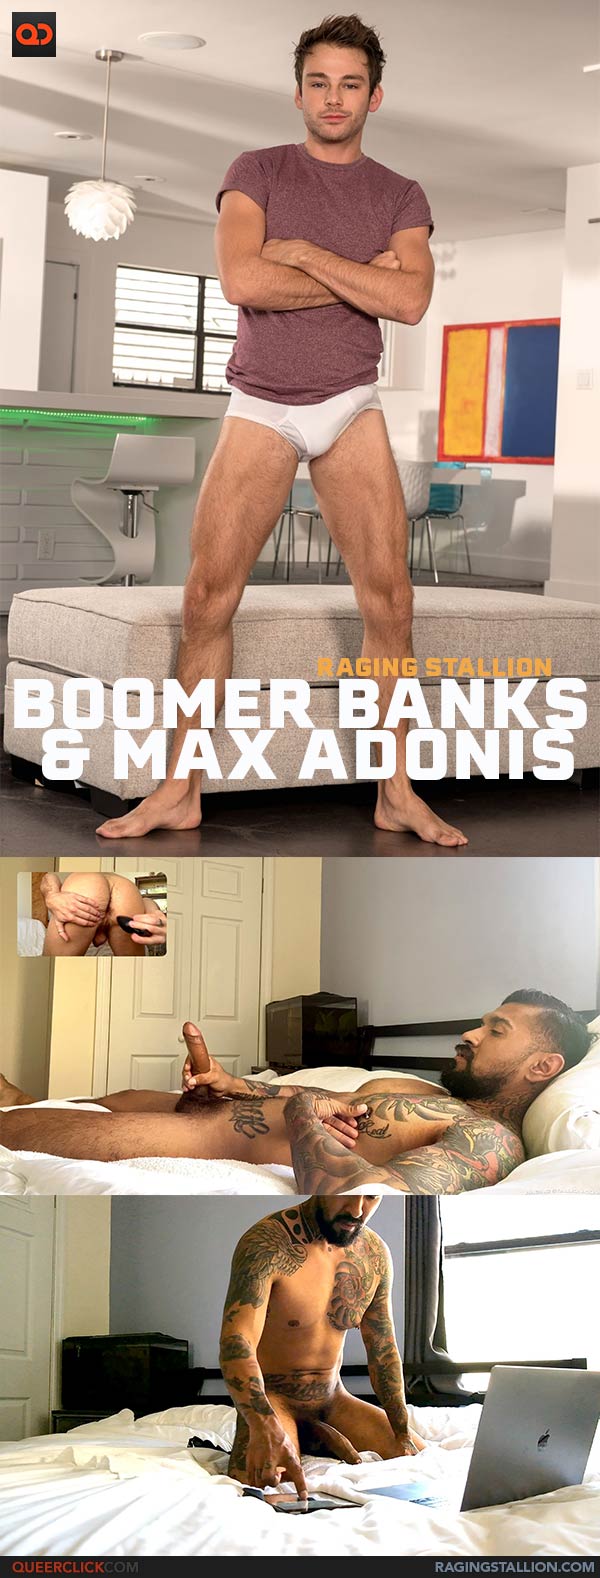 Raging Stallion: Boomer Banks and Max Adonis